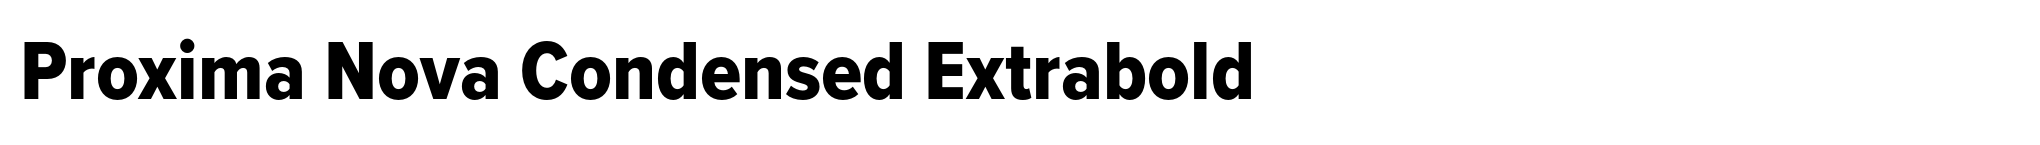 Proxima Nova Condensed Extrabold image